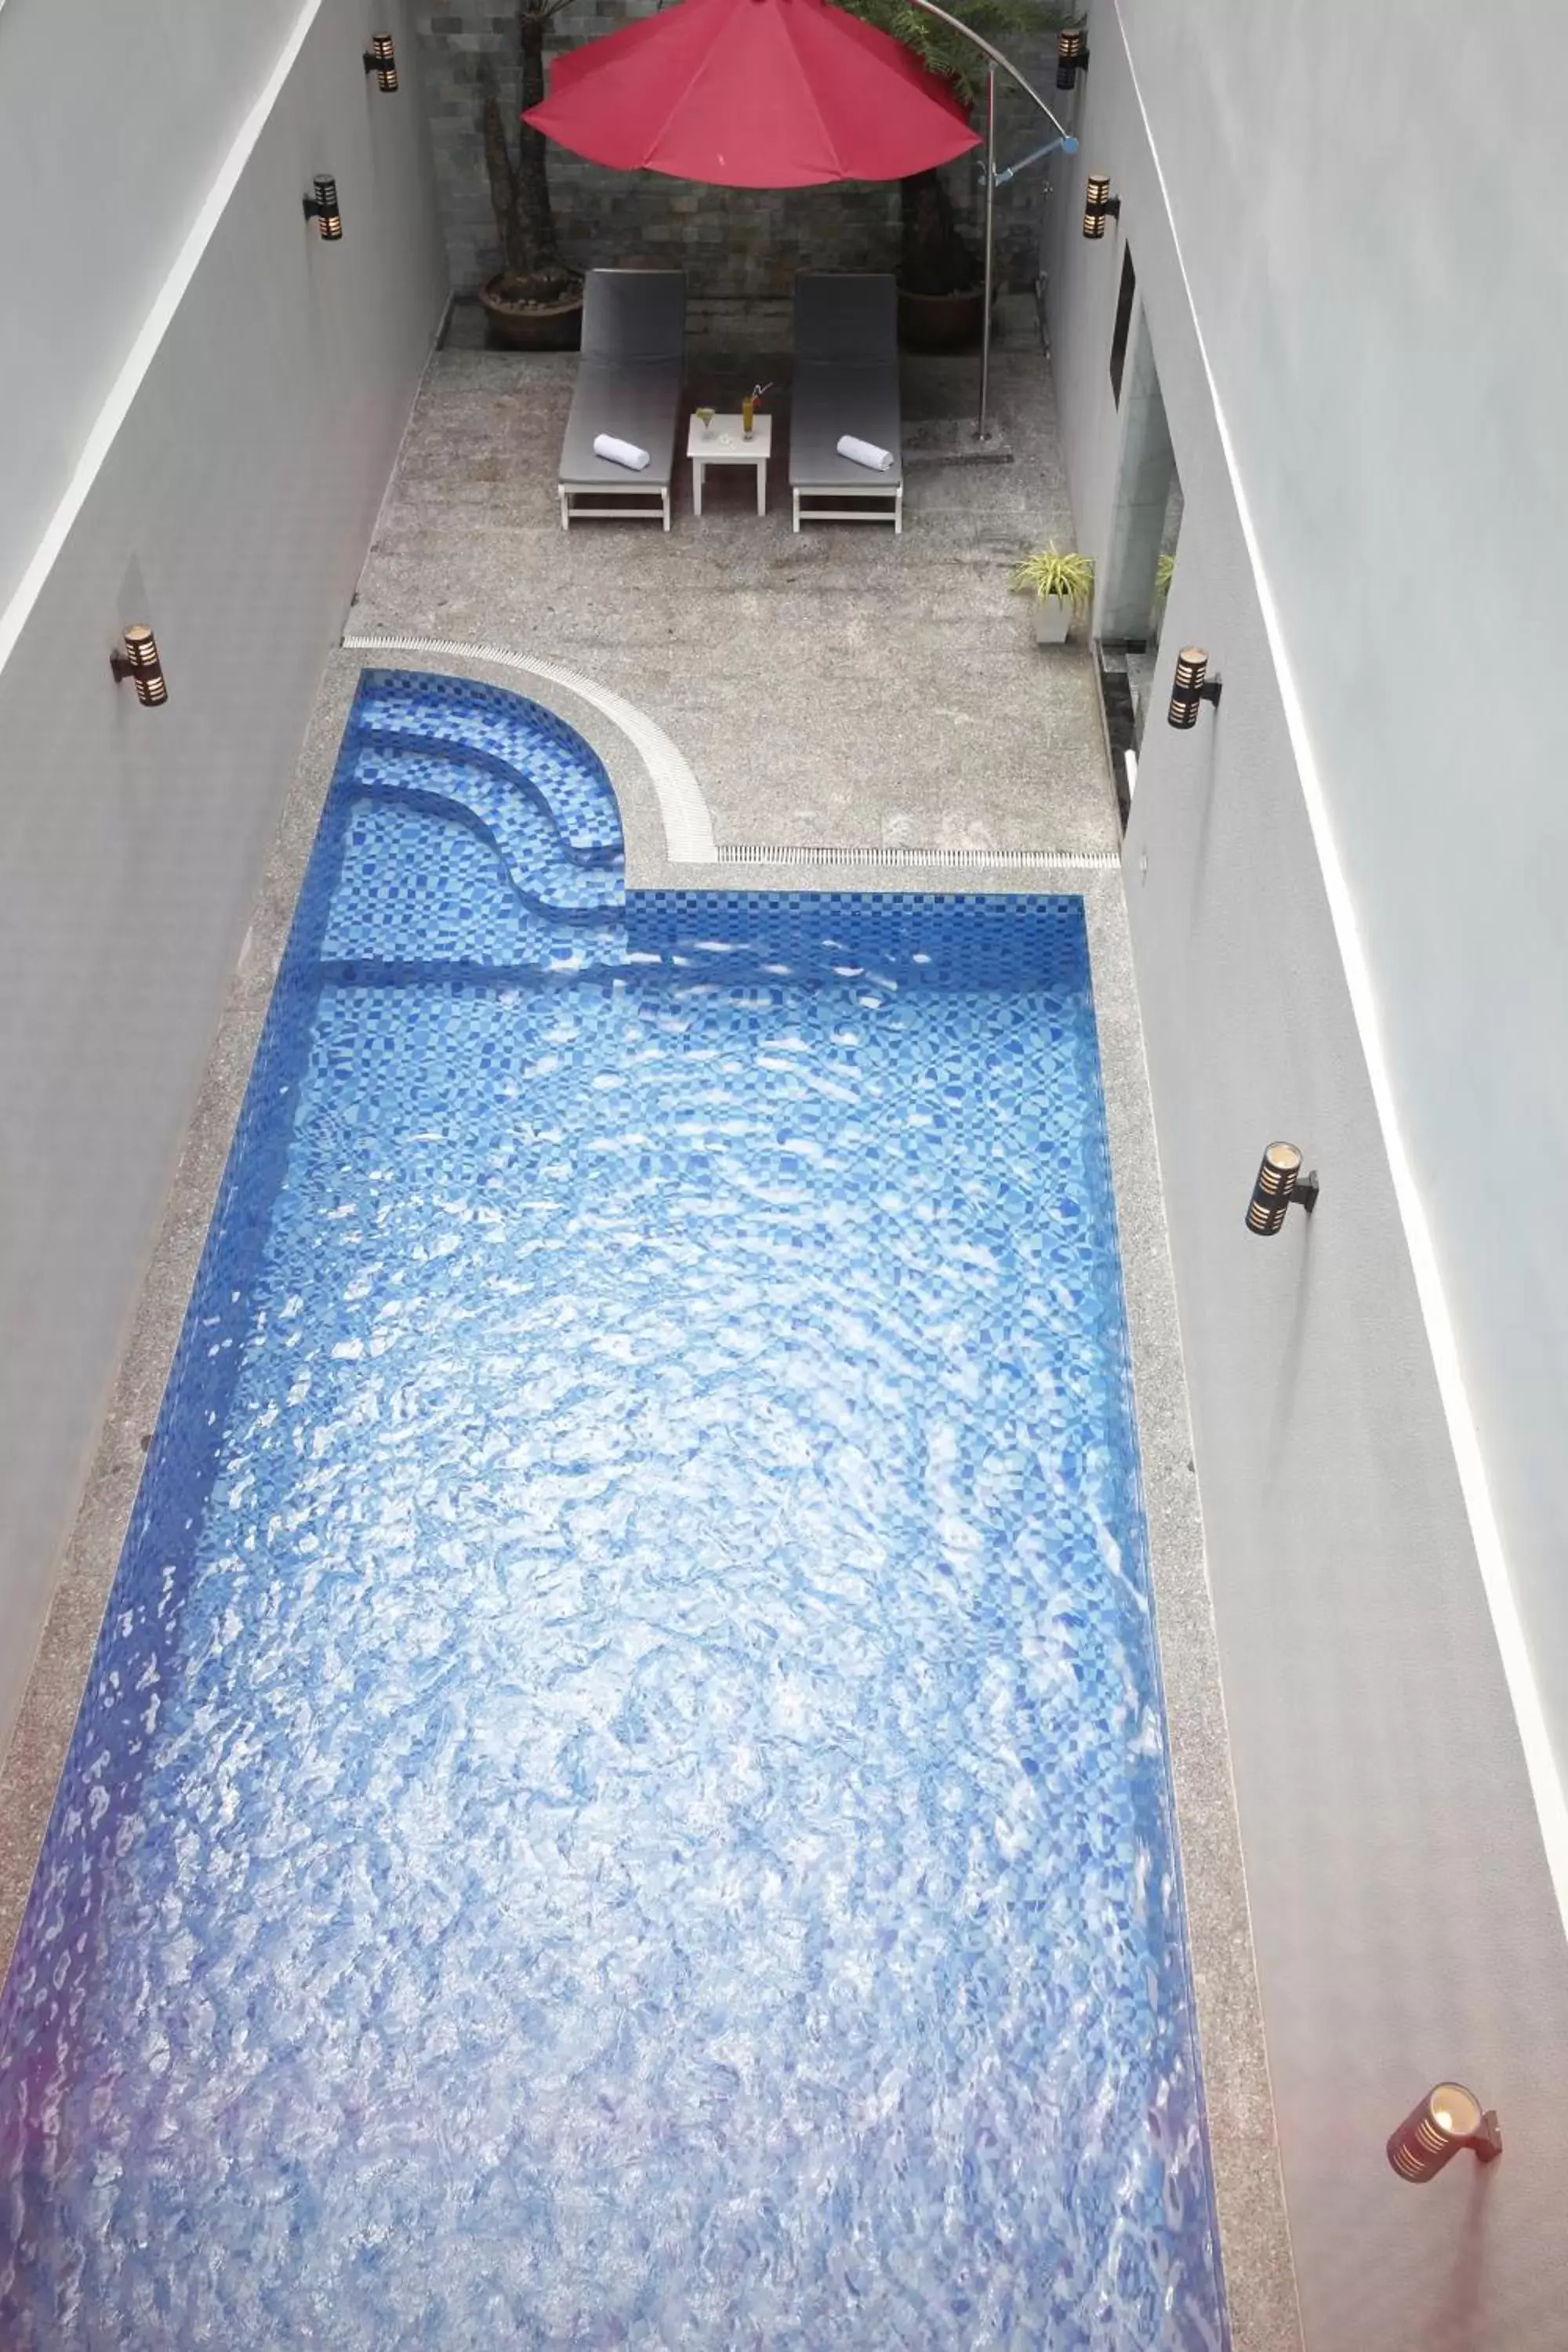 Swimming Pool in Starlet Hotel